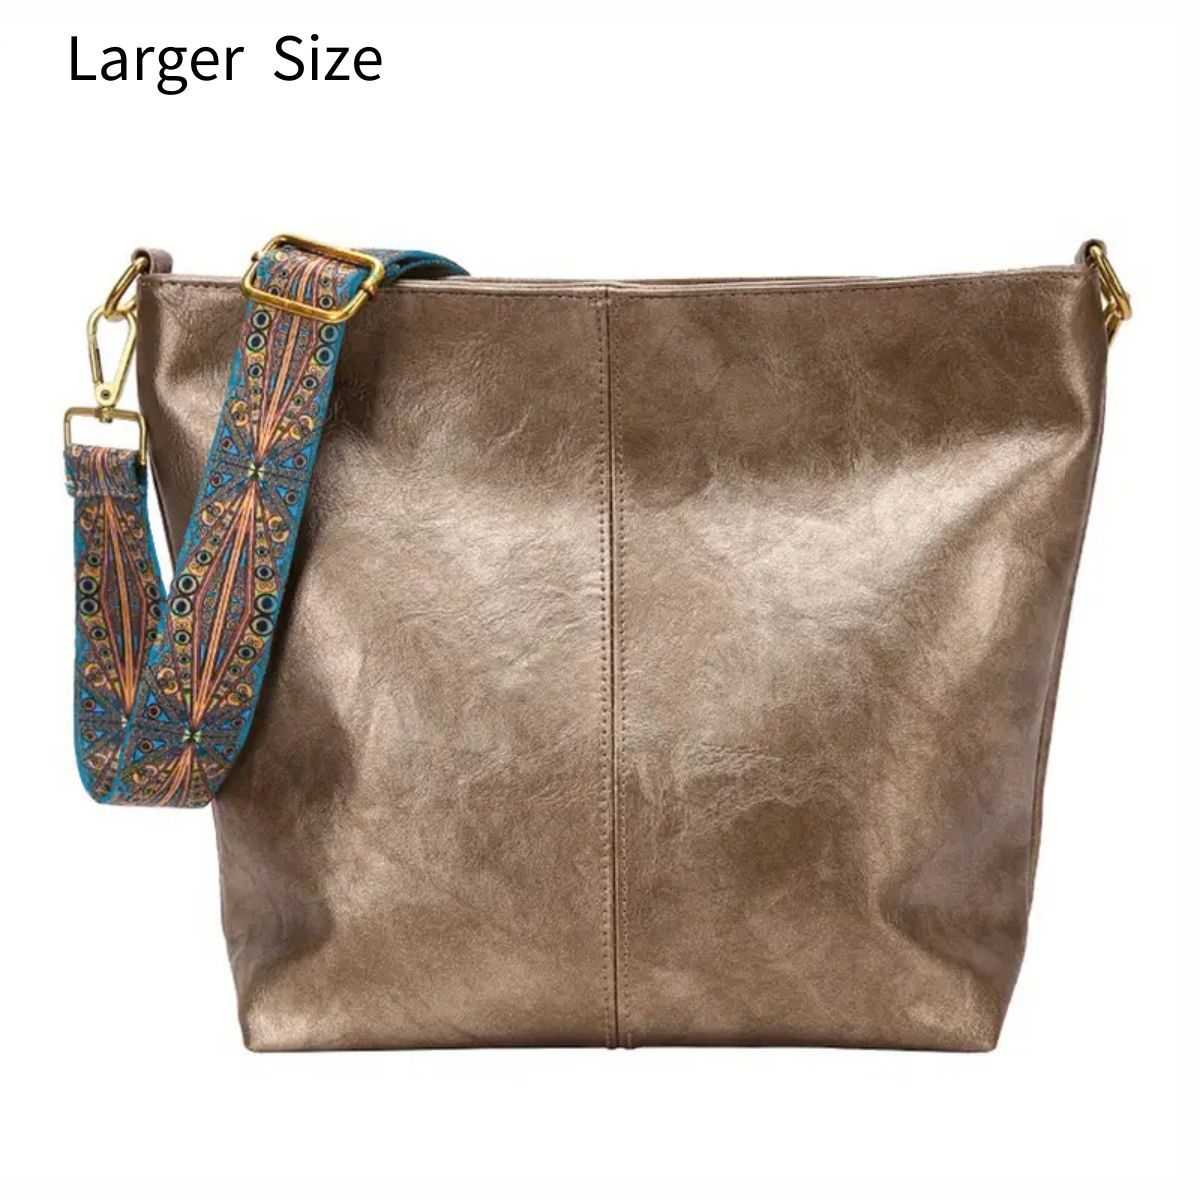 bag large size